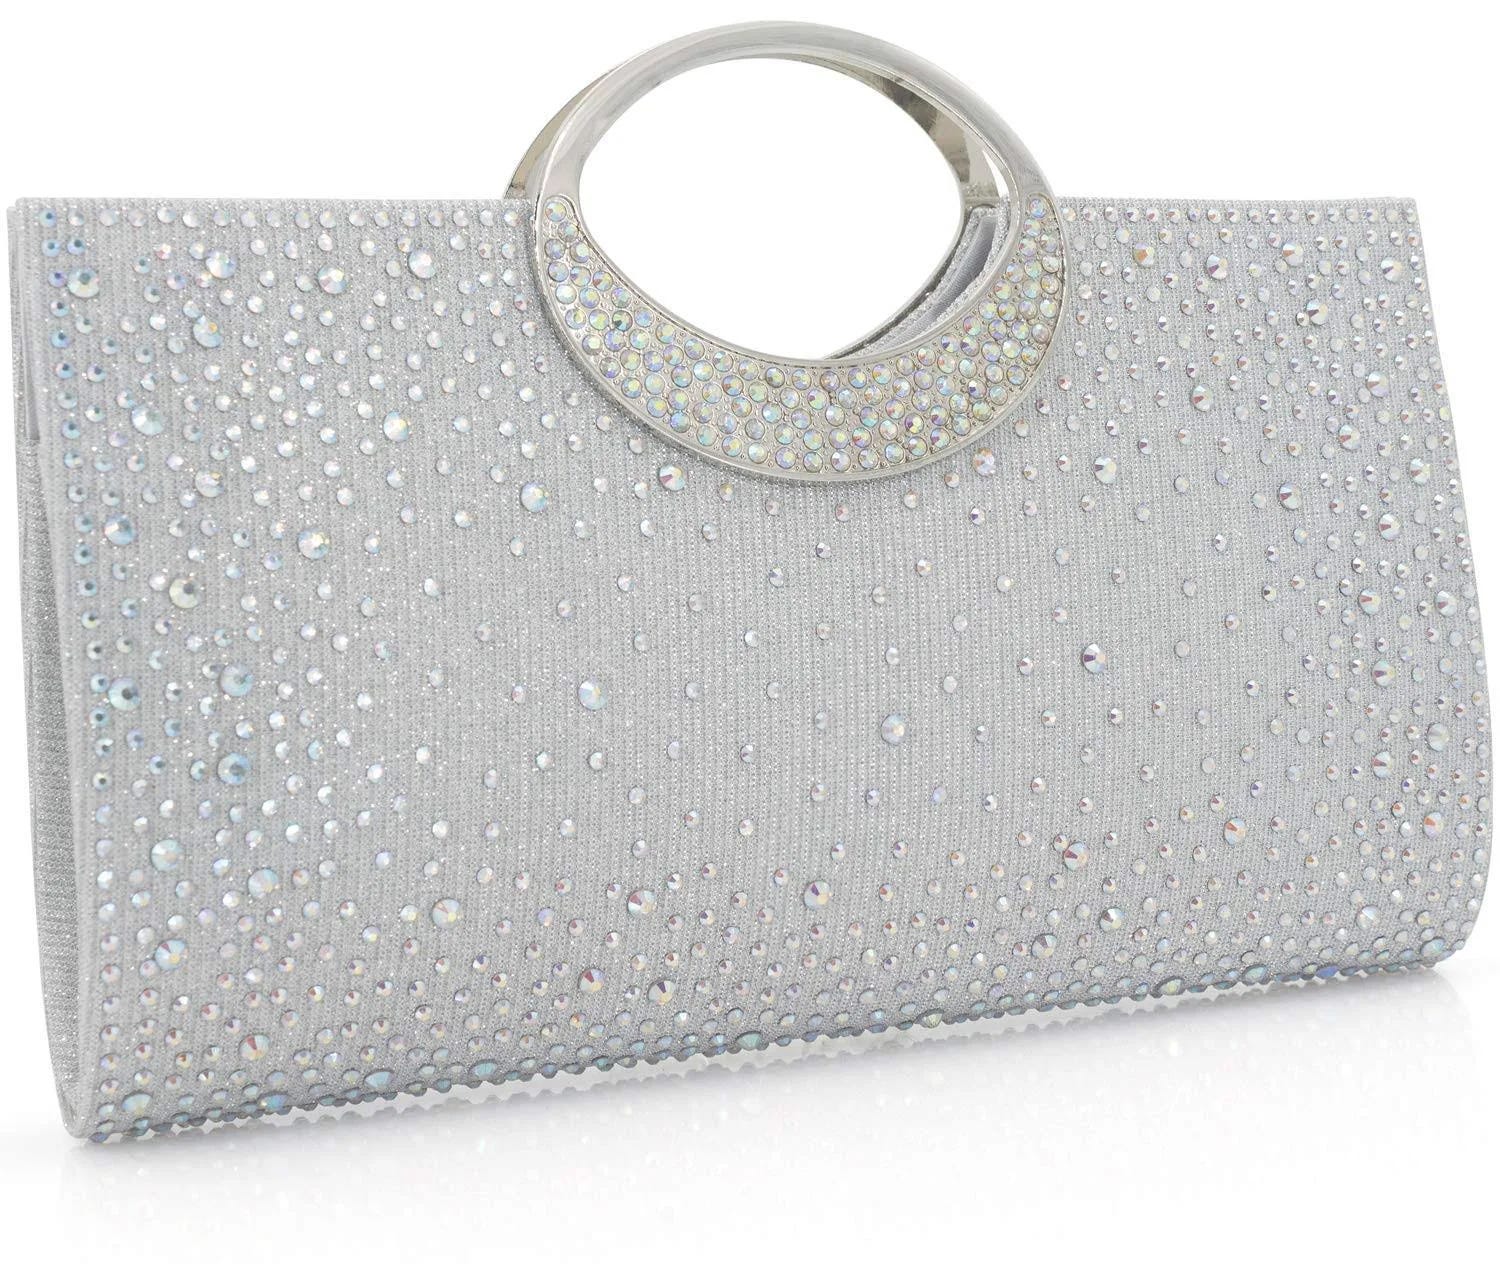 Rhinestone Crystal Evening Clutch Bag with Adjustable Handle | Image